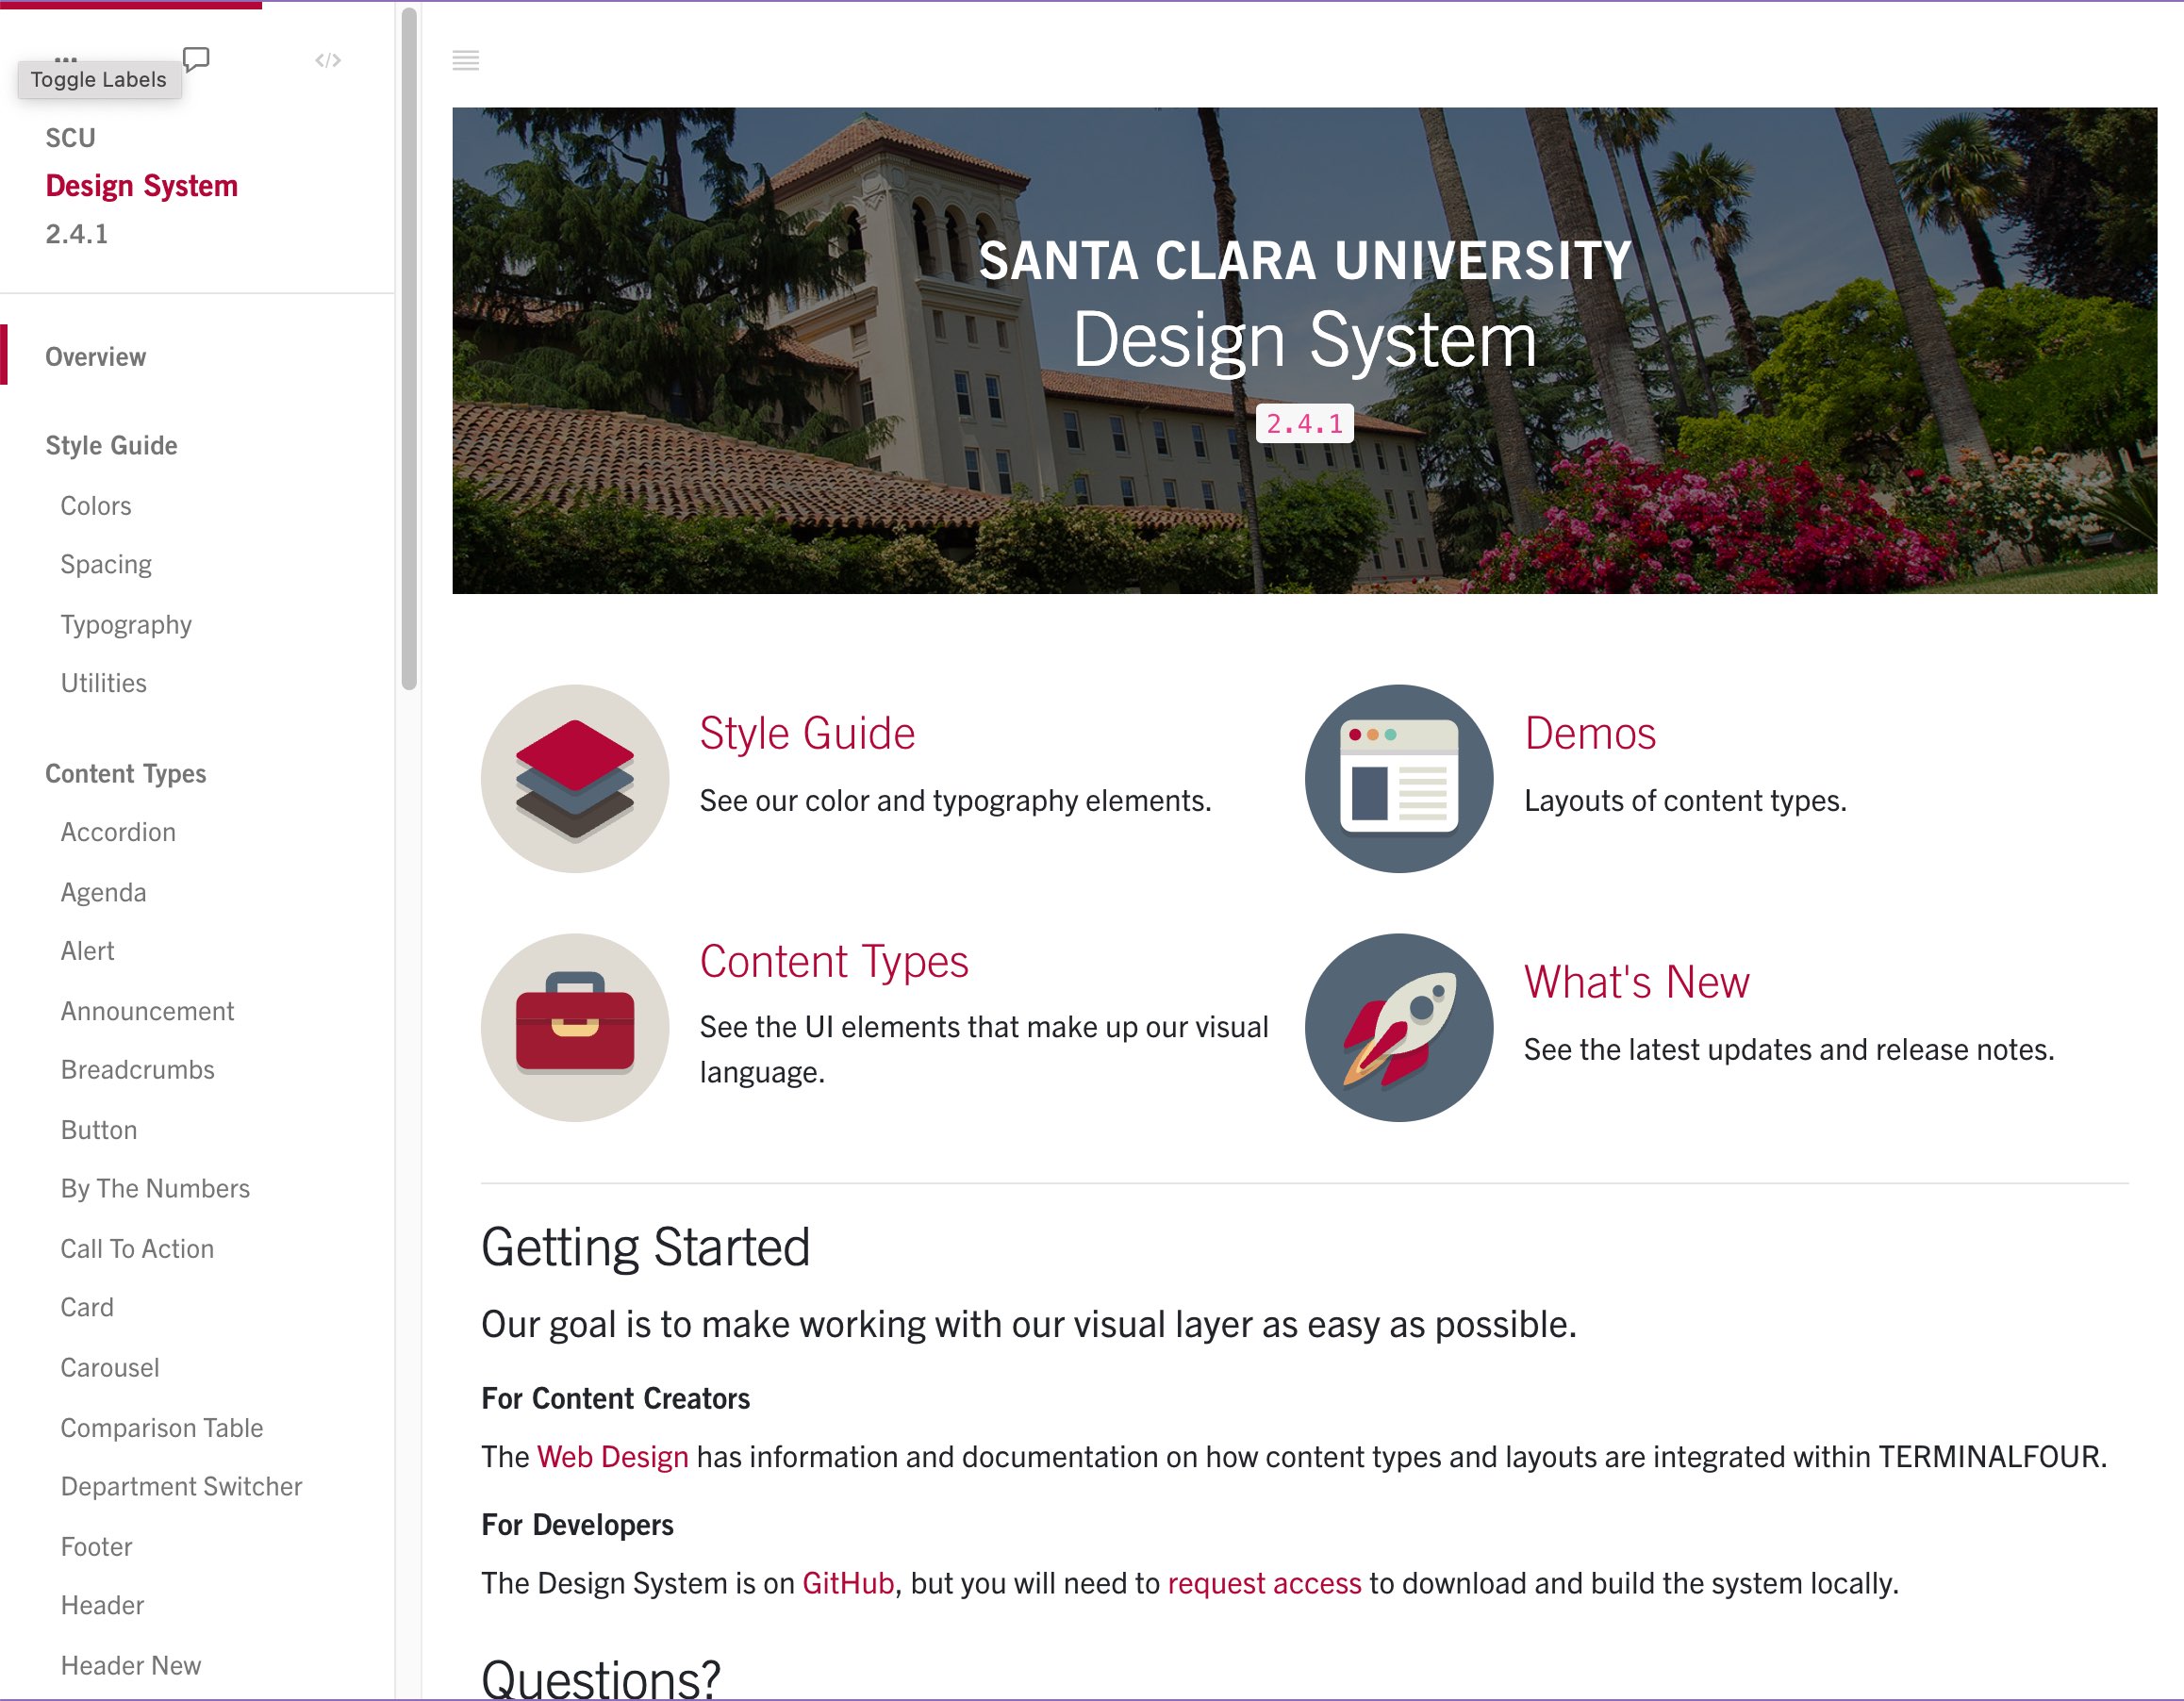 Santa Clara University's Design System Landing Page